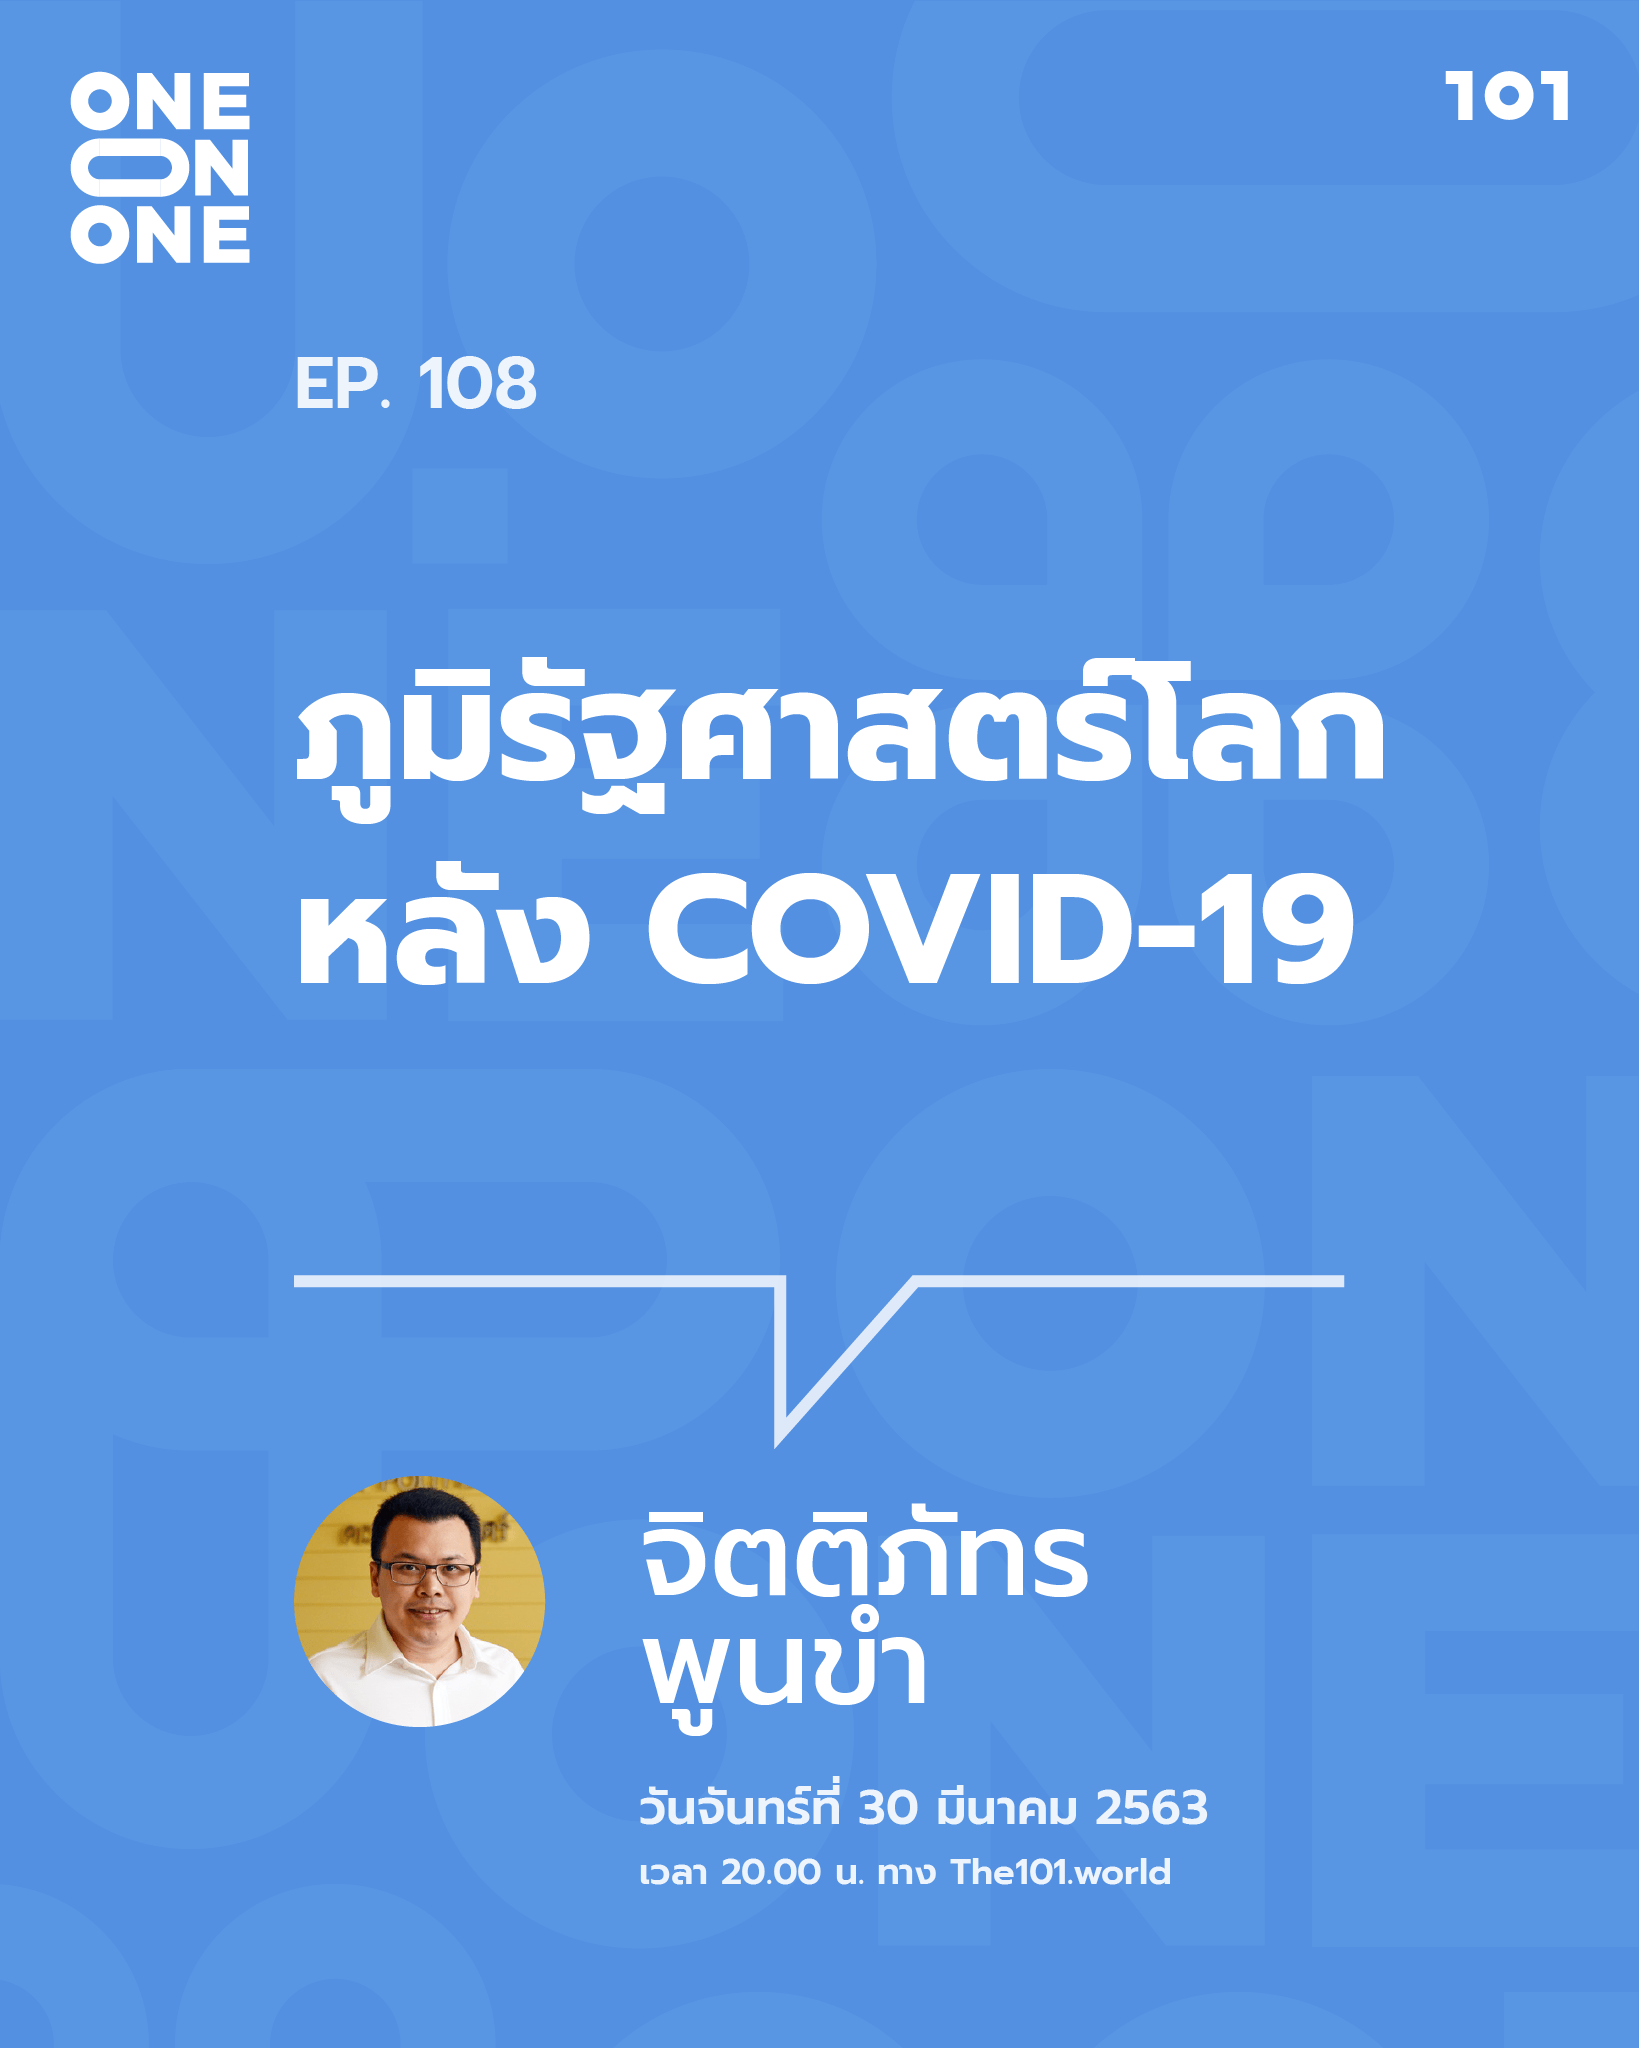 101 One-on-One ep.108 : "ภูมิรัฐศาสตร์โลกหลัง COVID-19"